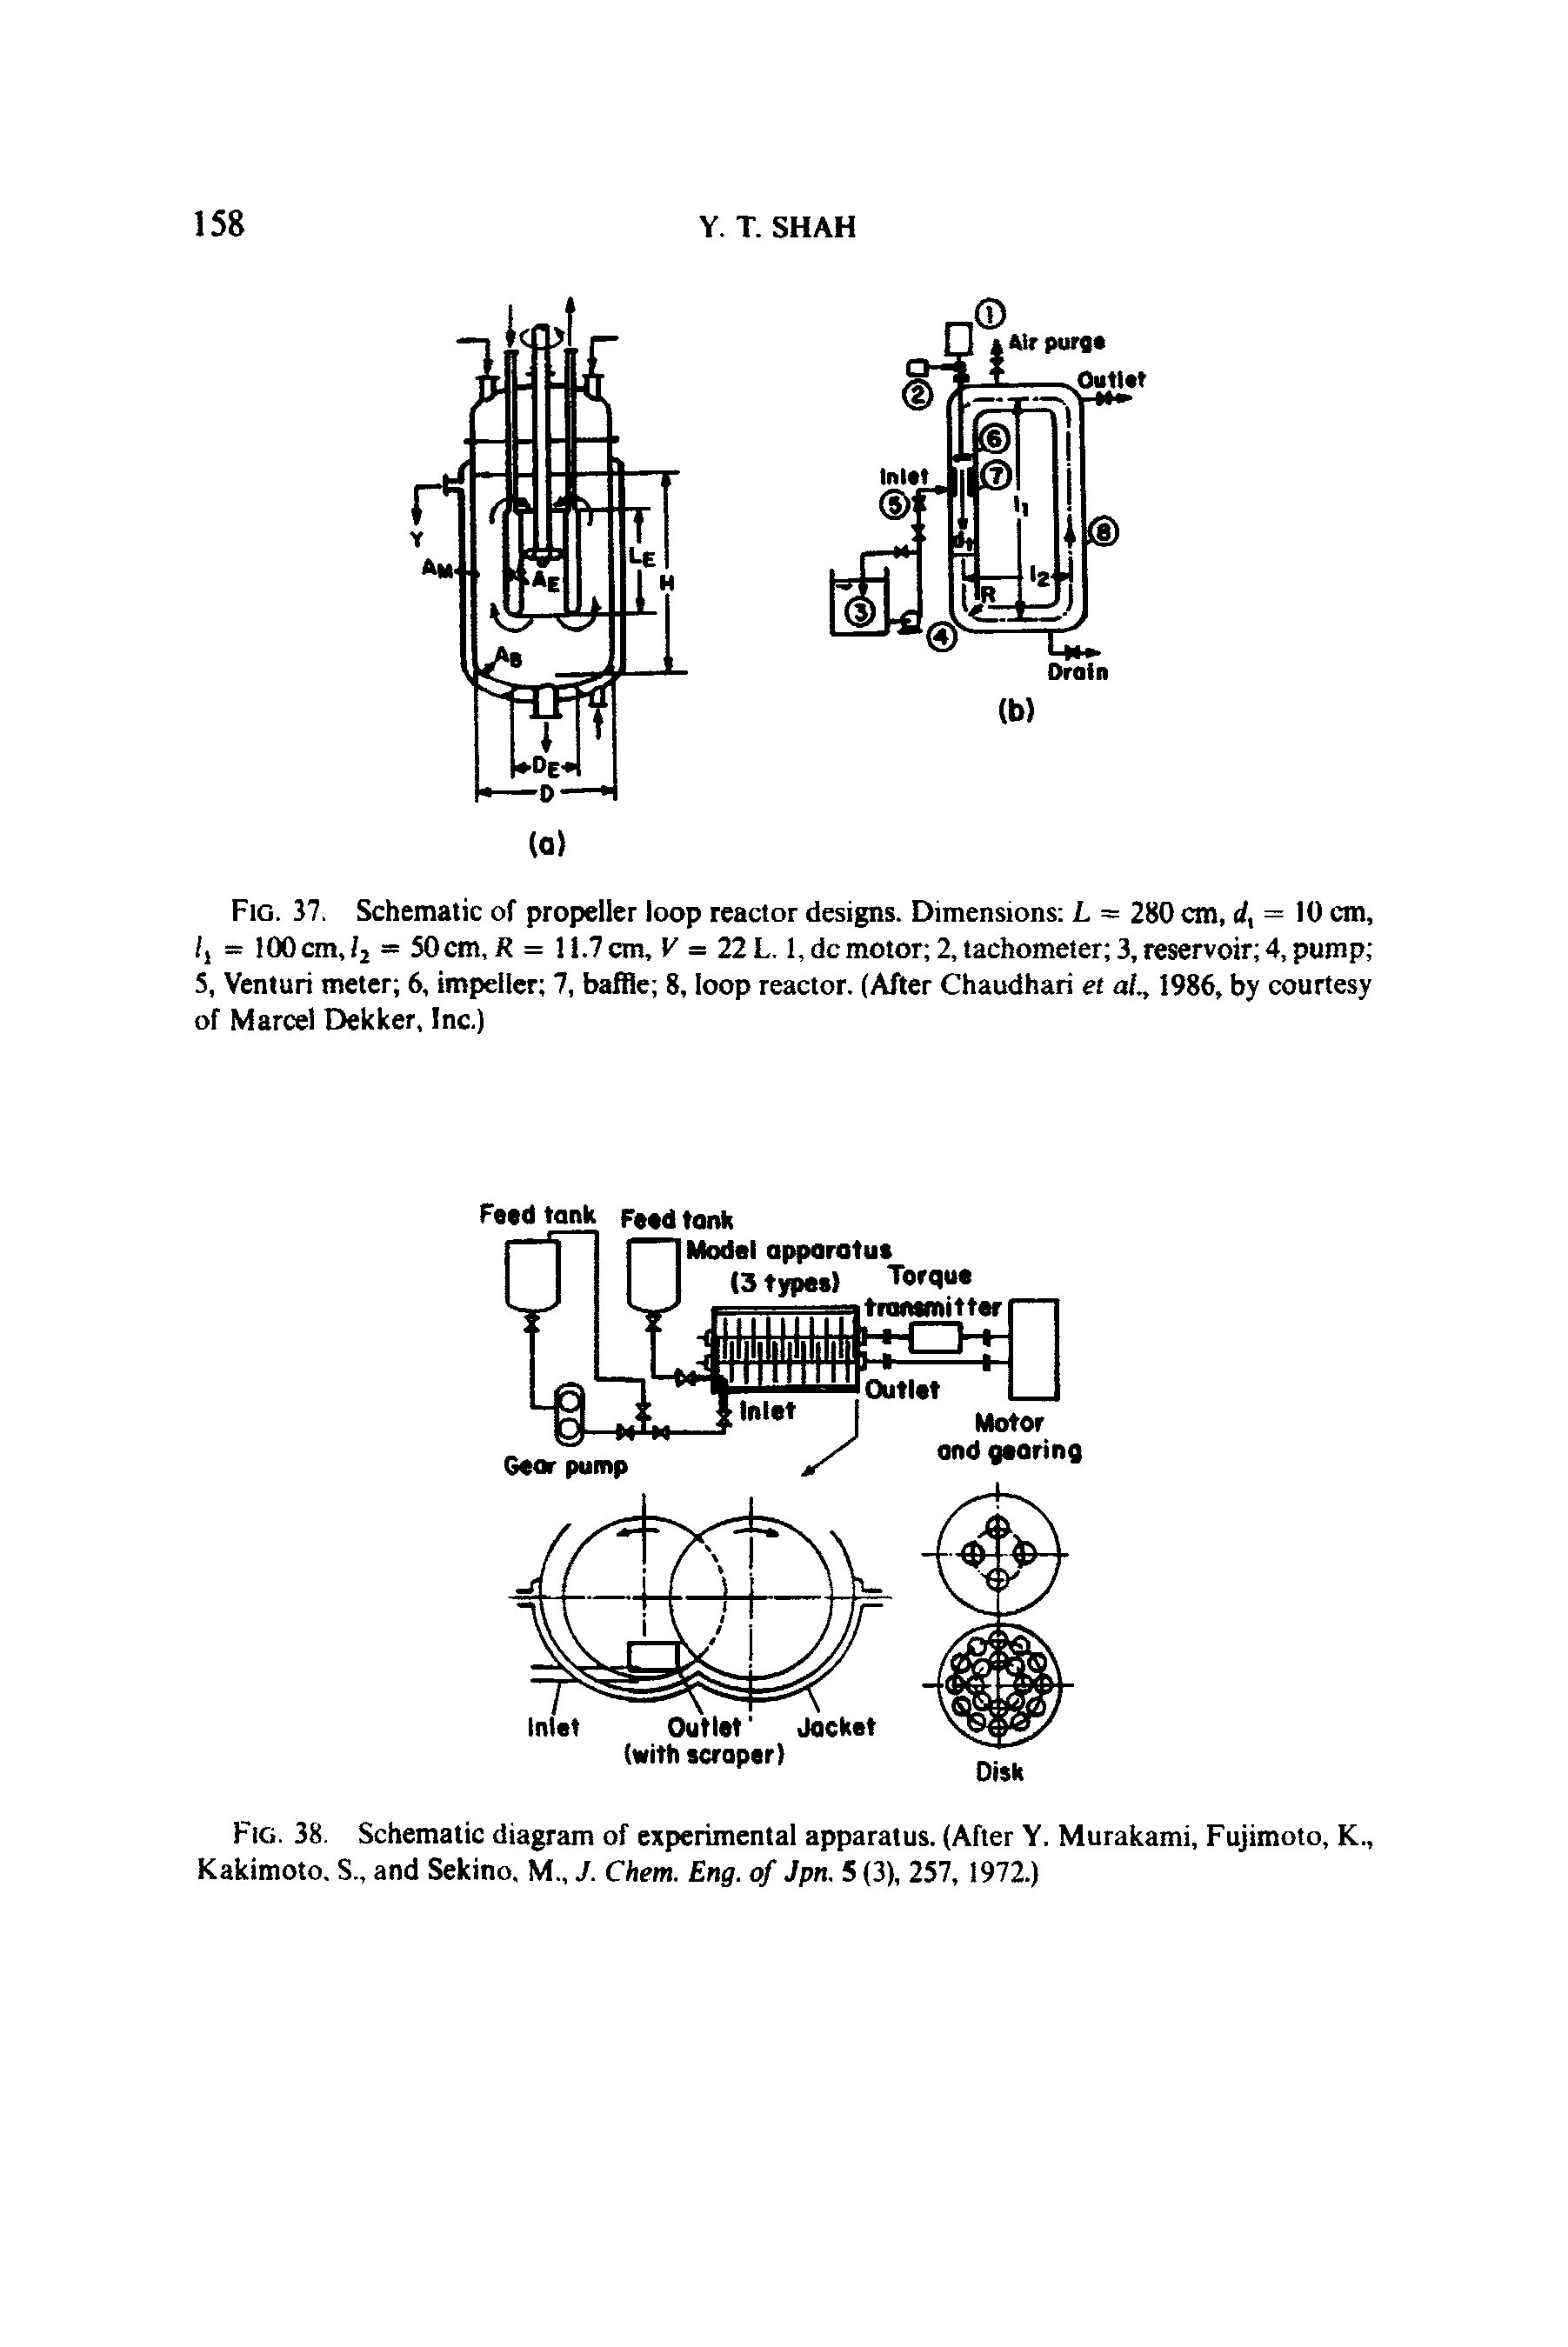 Fig. 38. Schematic diagram of experimental apparatus. (After Y. Murakami, Fujimoto, K., Kakimoto. S., and Sekino. M., J. Chem. Eng. of Jpn. 5 (3), 257, 1972.)...